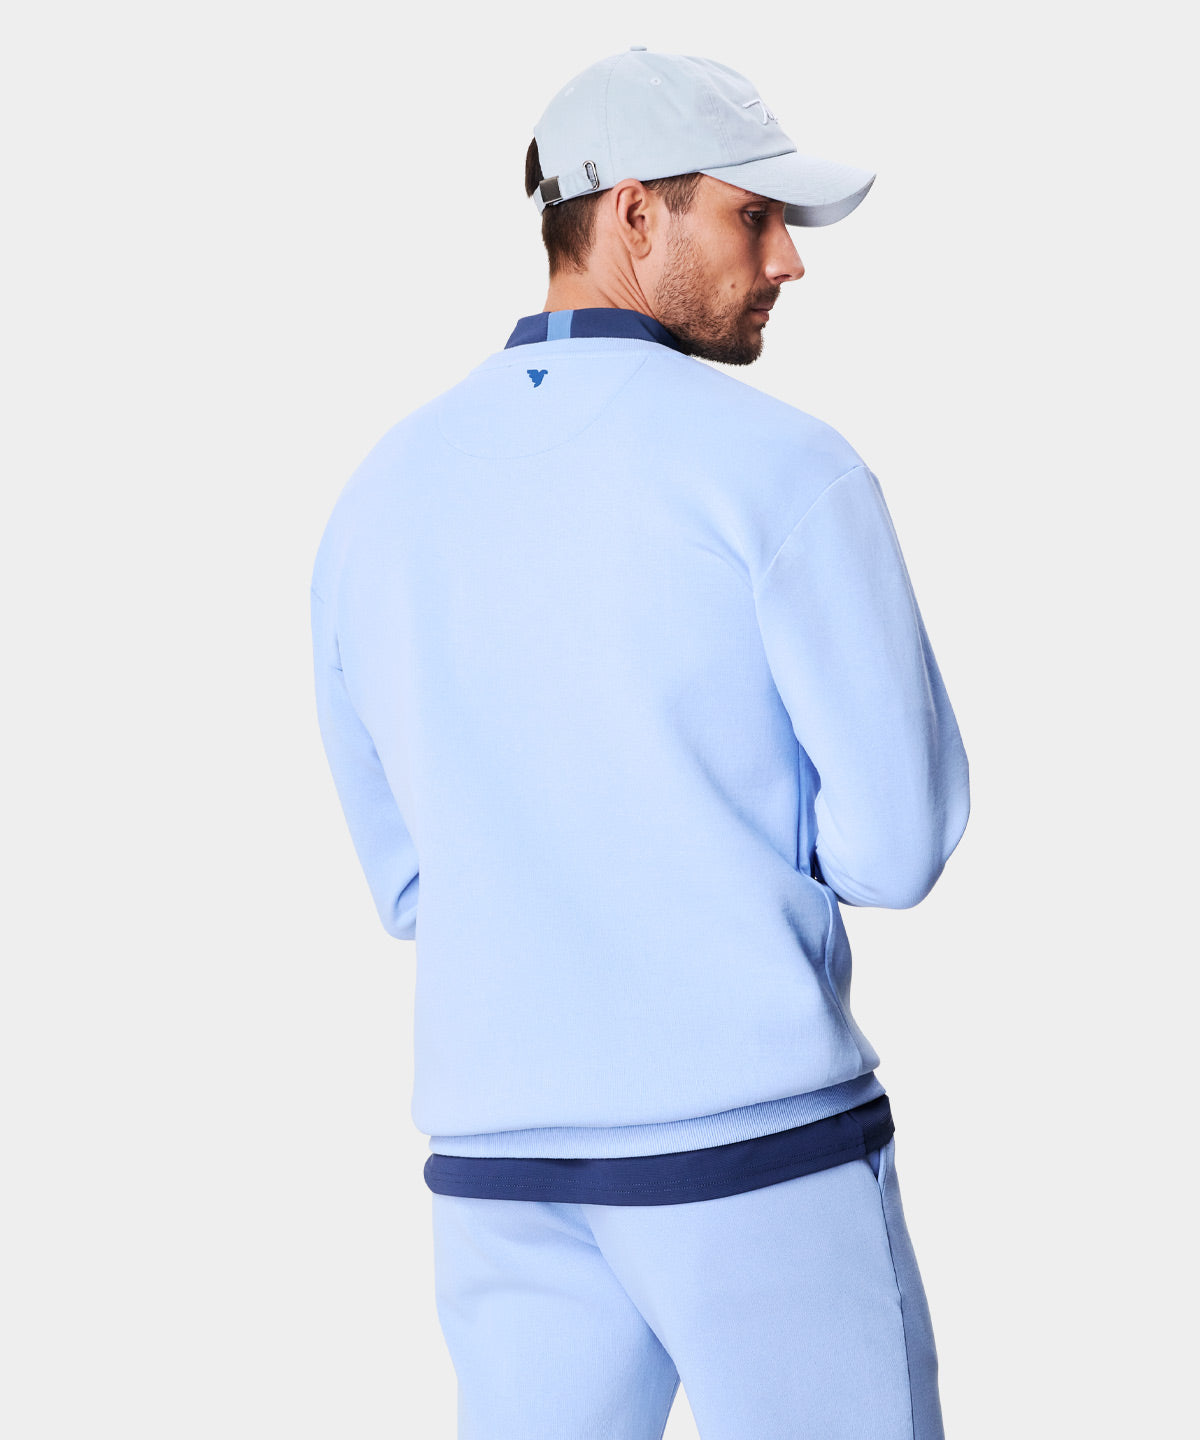 Powder Blue Range Sweater S | Macade Golf